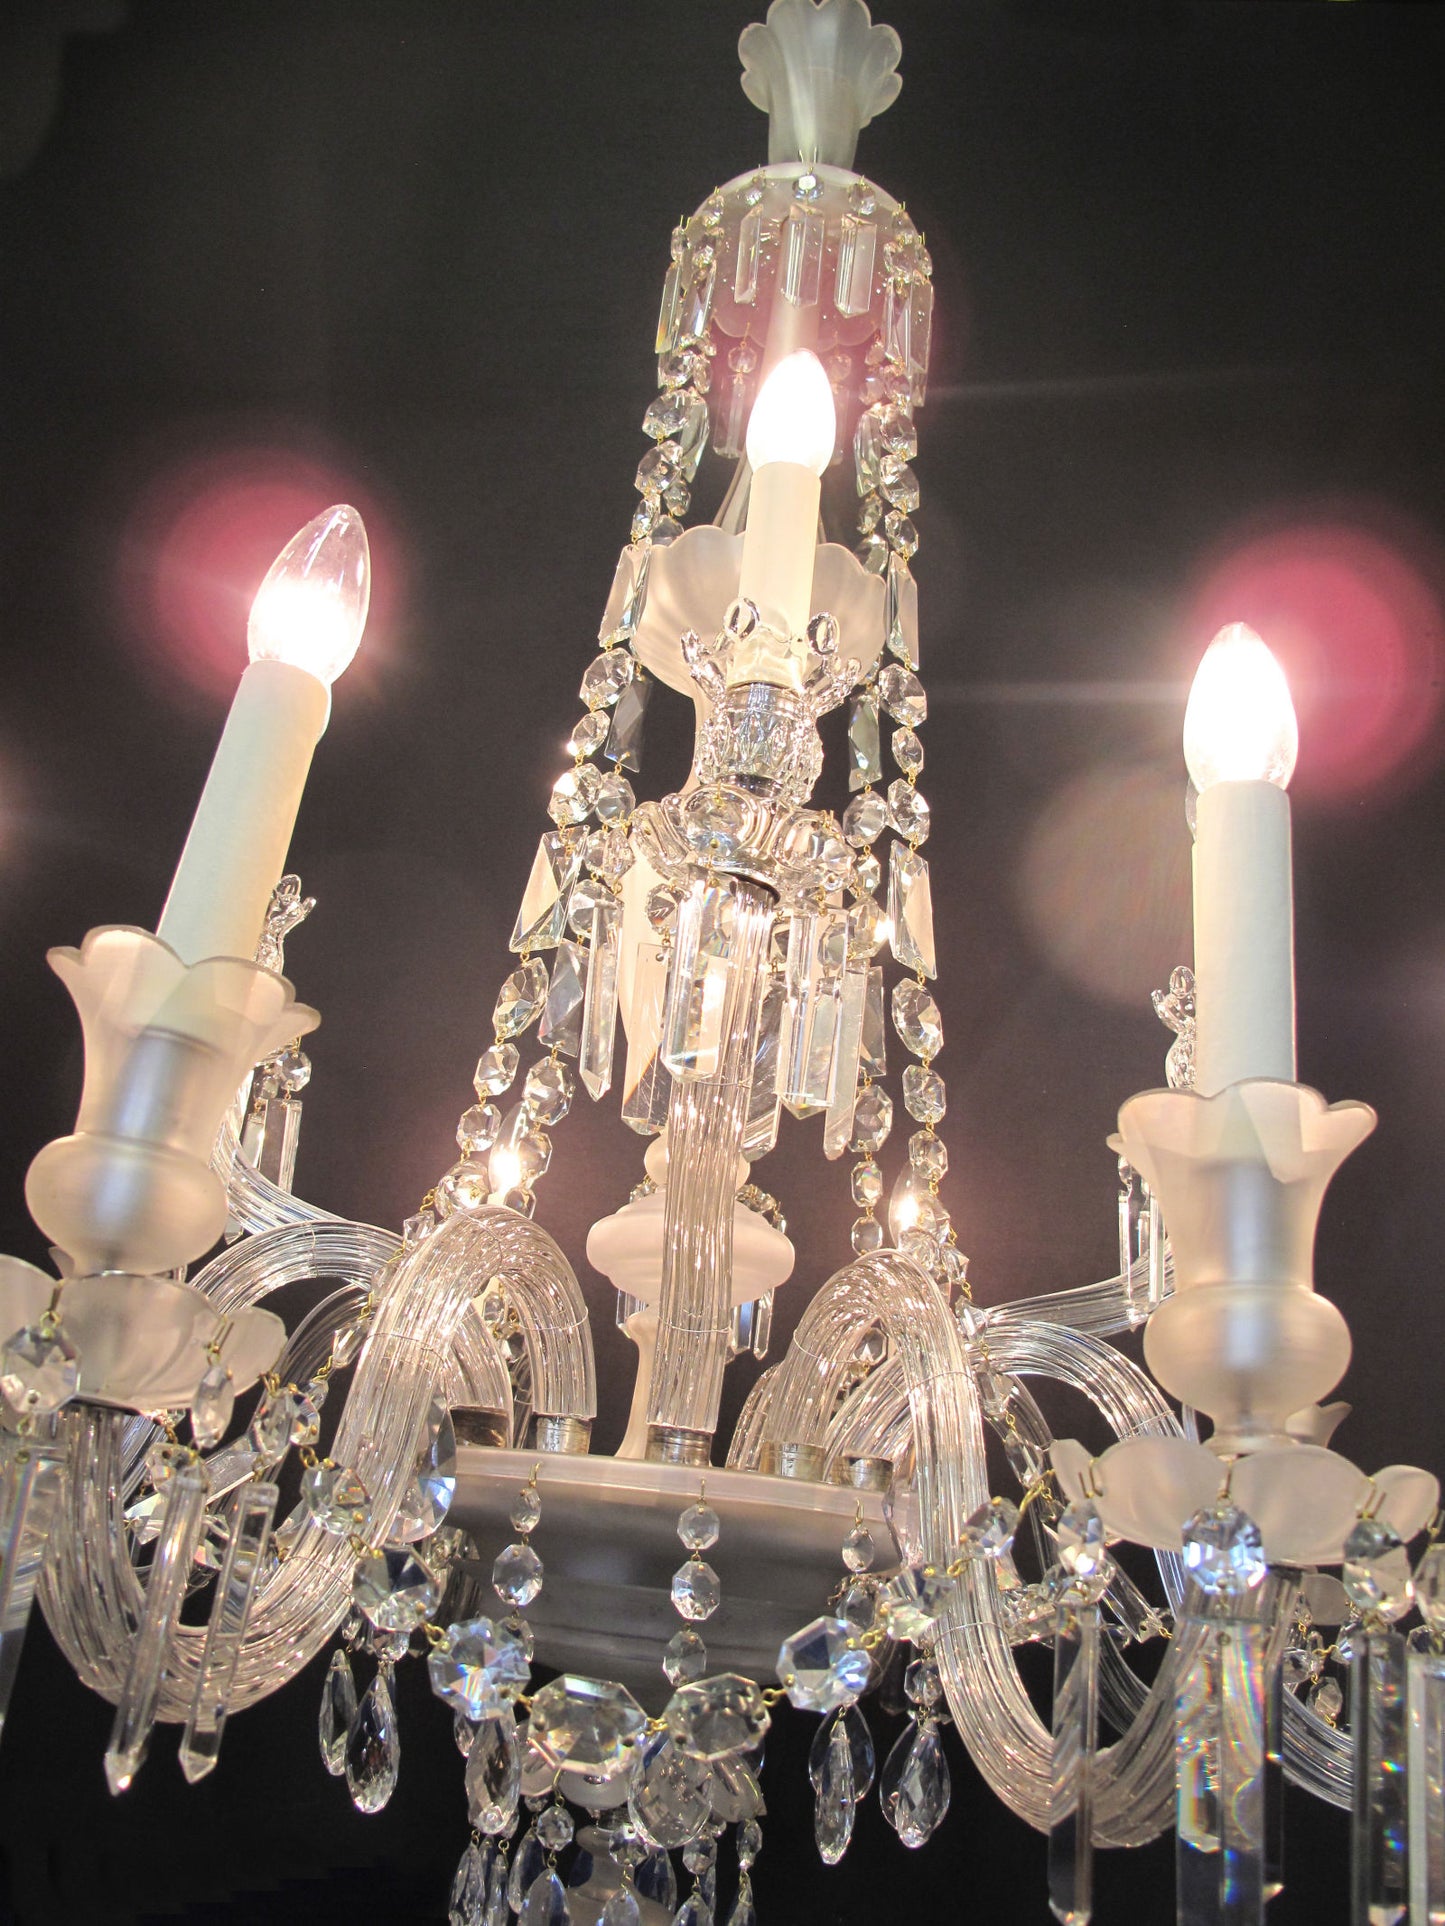 12 arm victorian chandelier, lit up at a slant